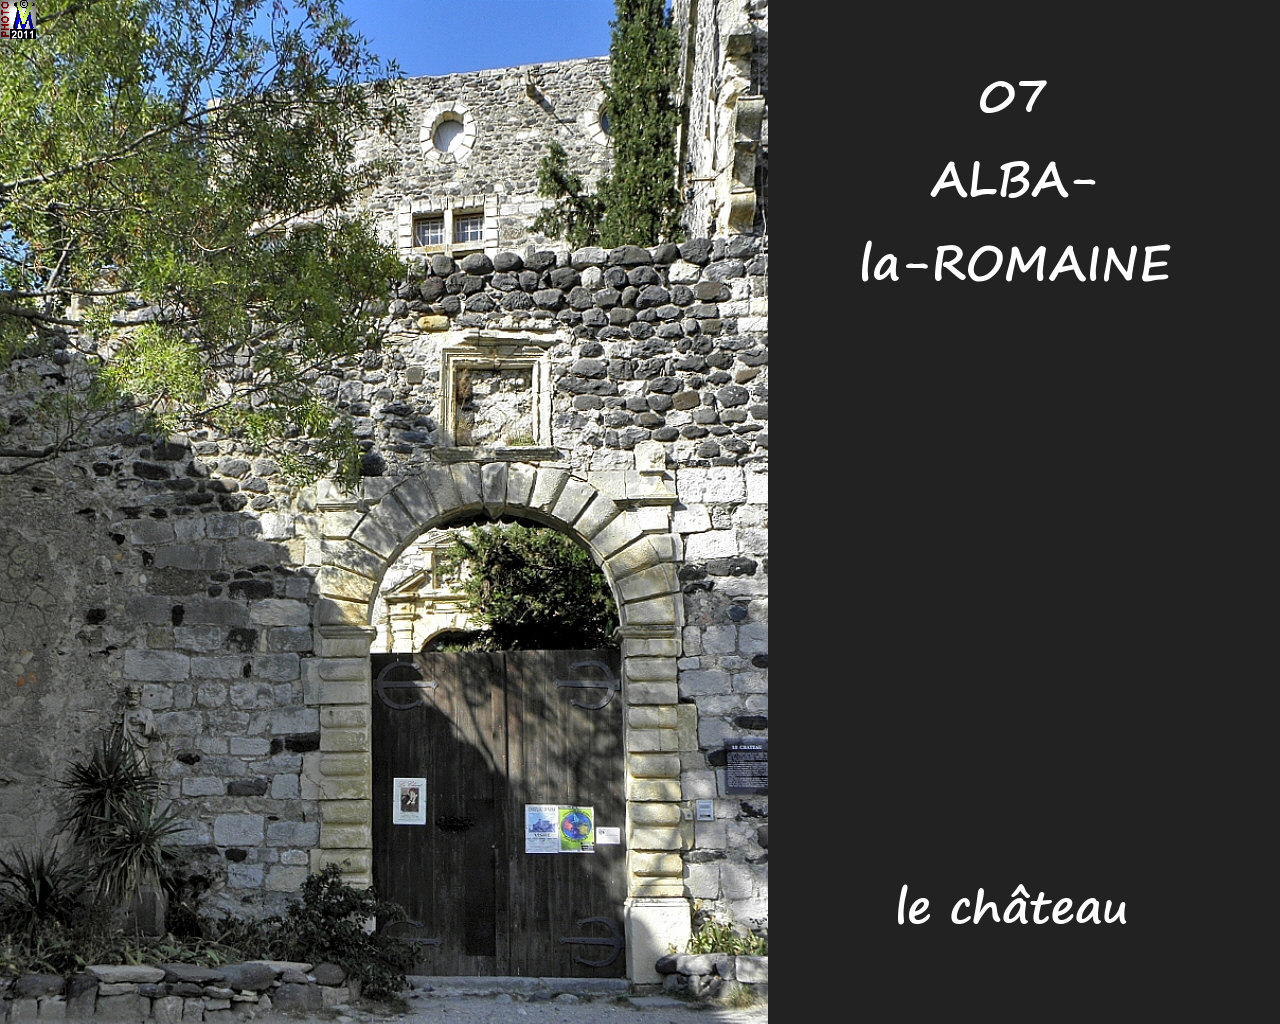 07ALBA-ROMAINE_chateau_108.jpg